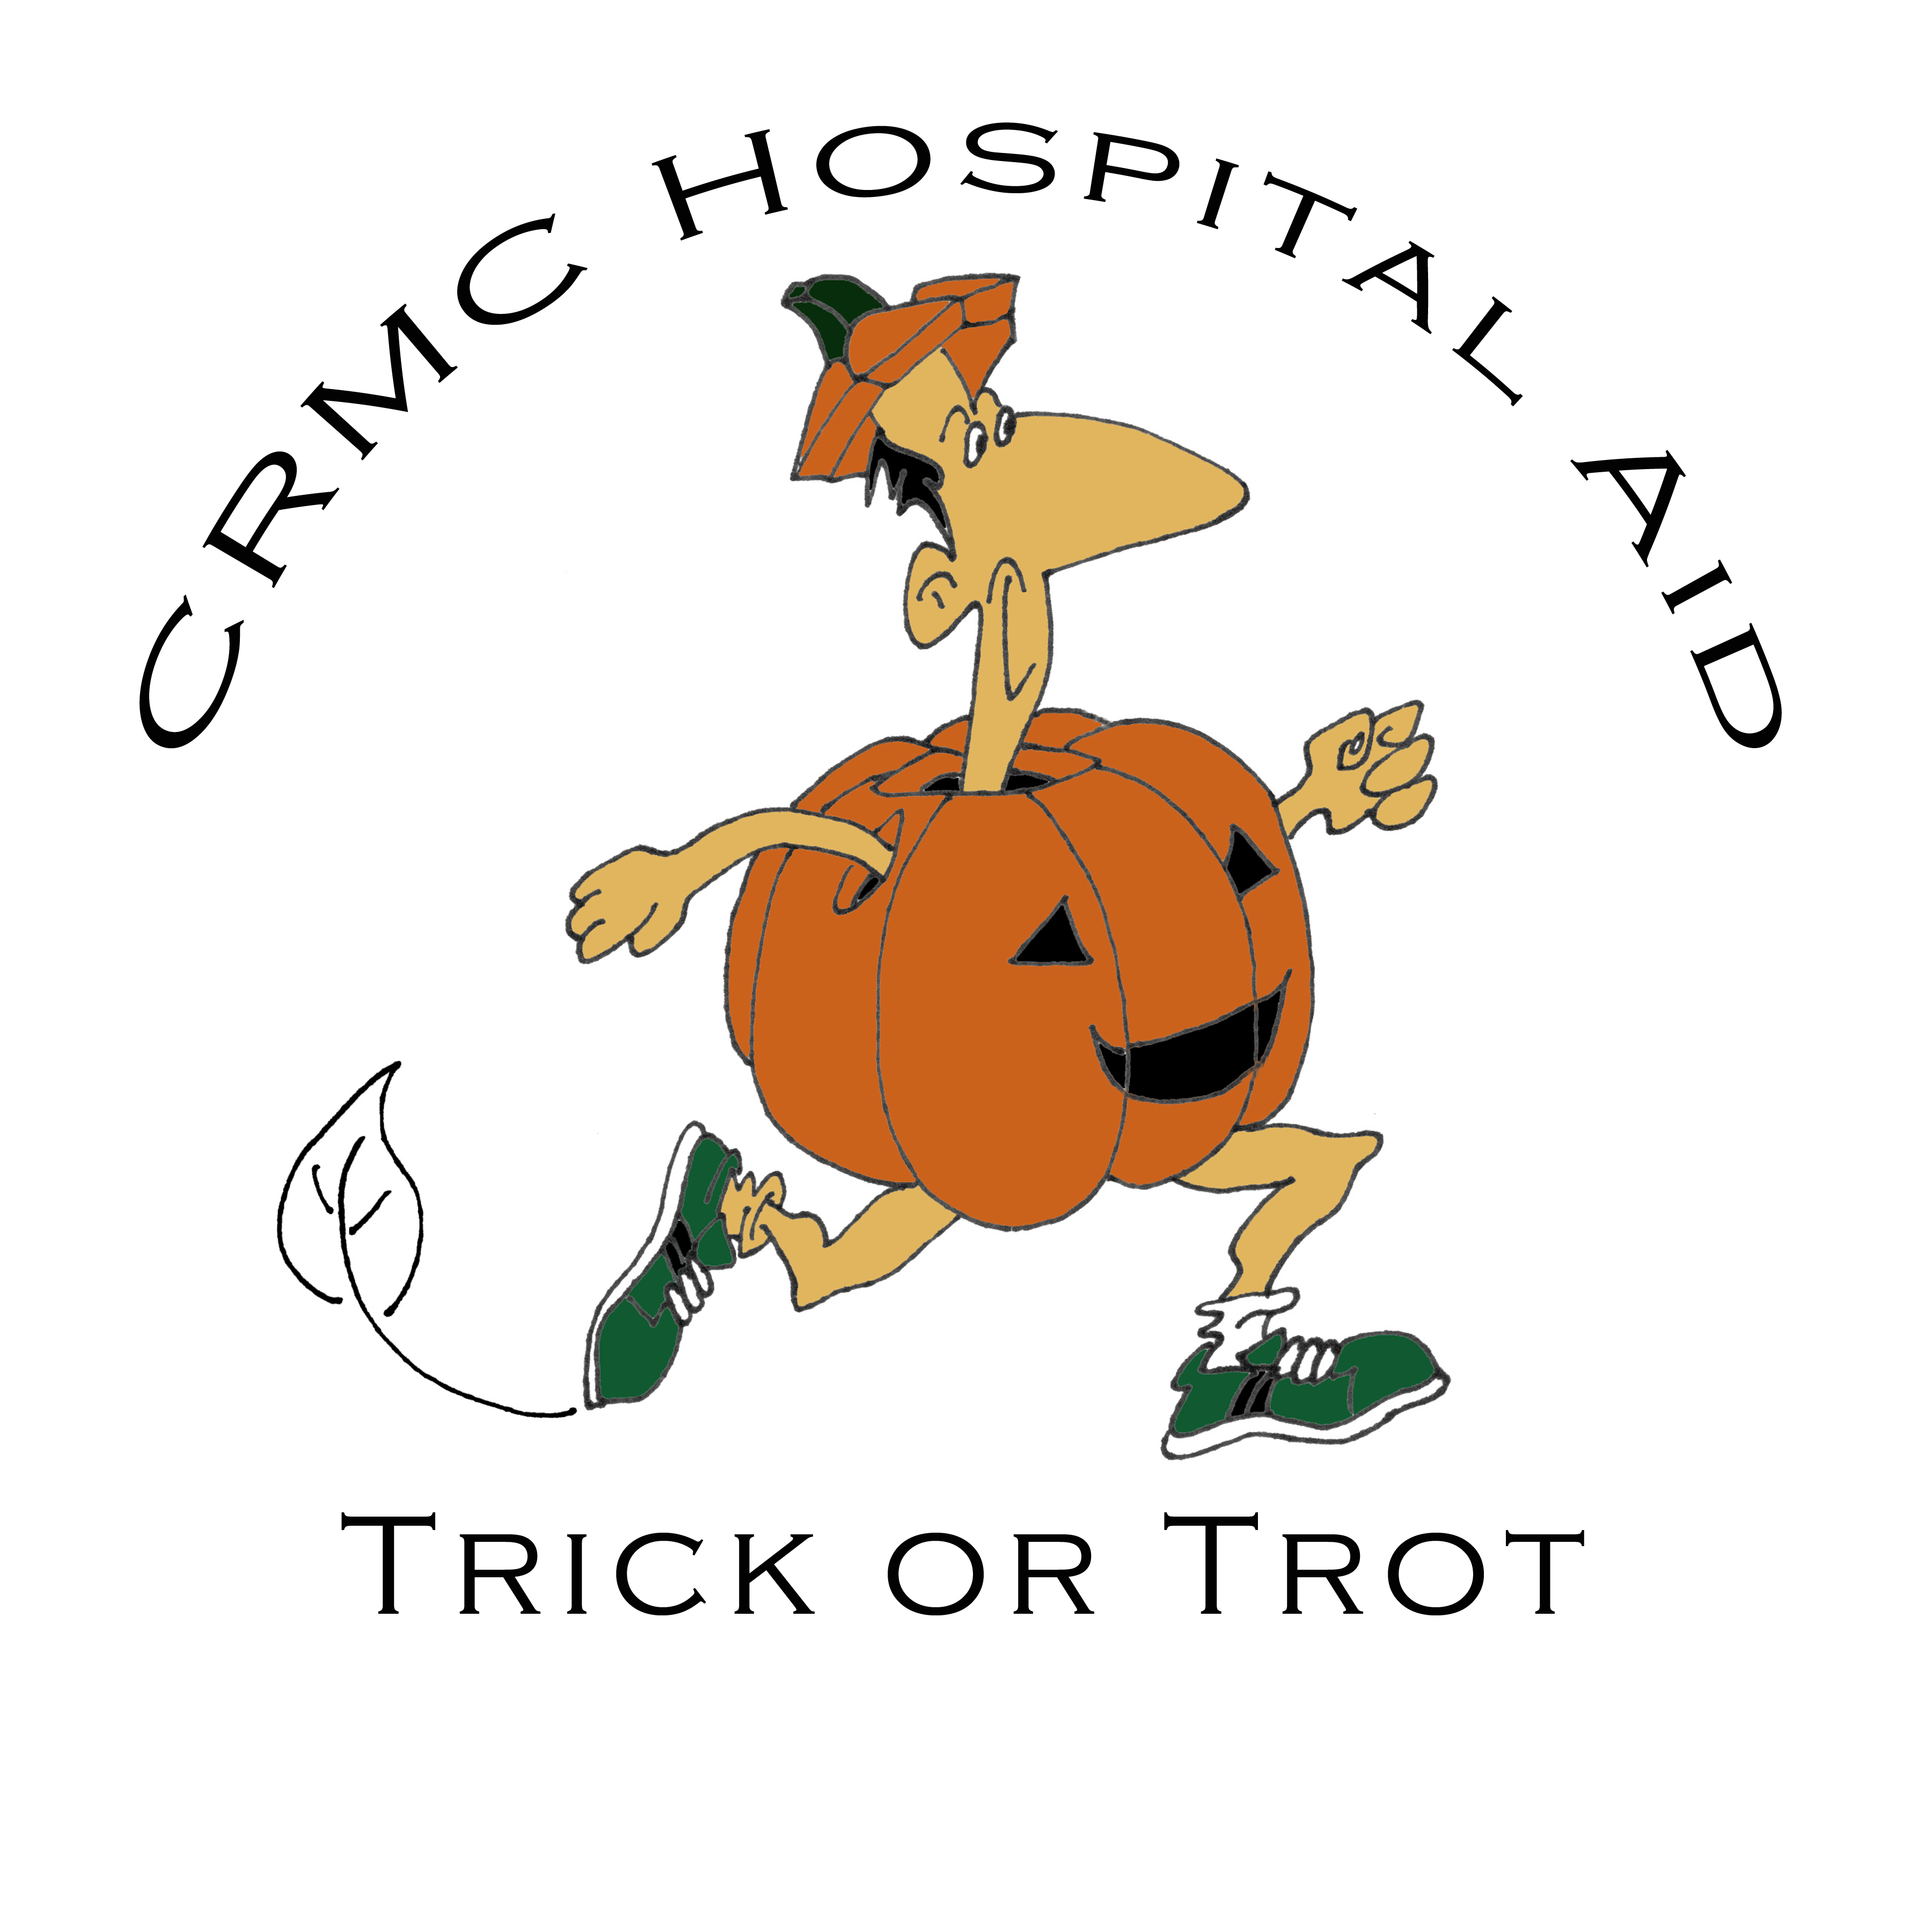 CRMC Hospital Aid Trick or Trot